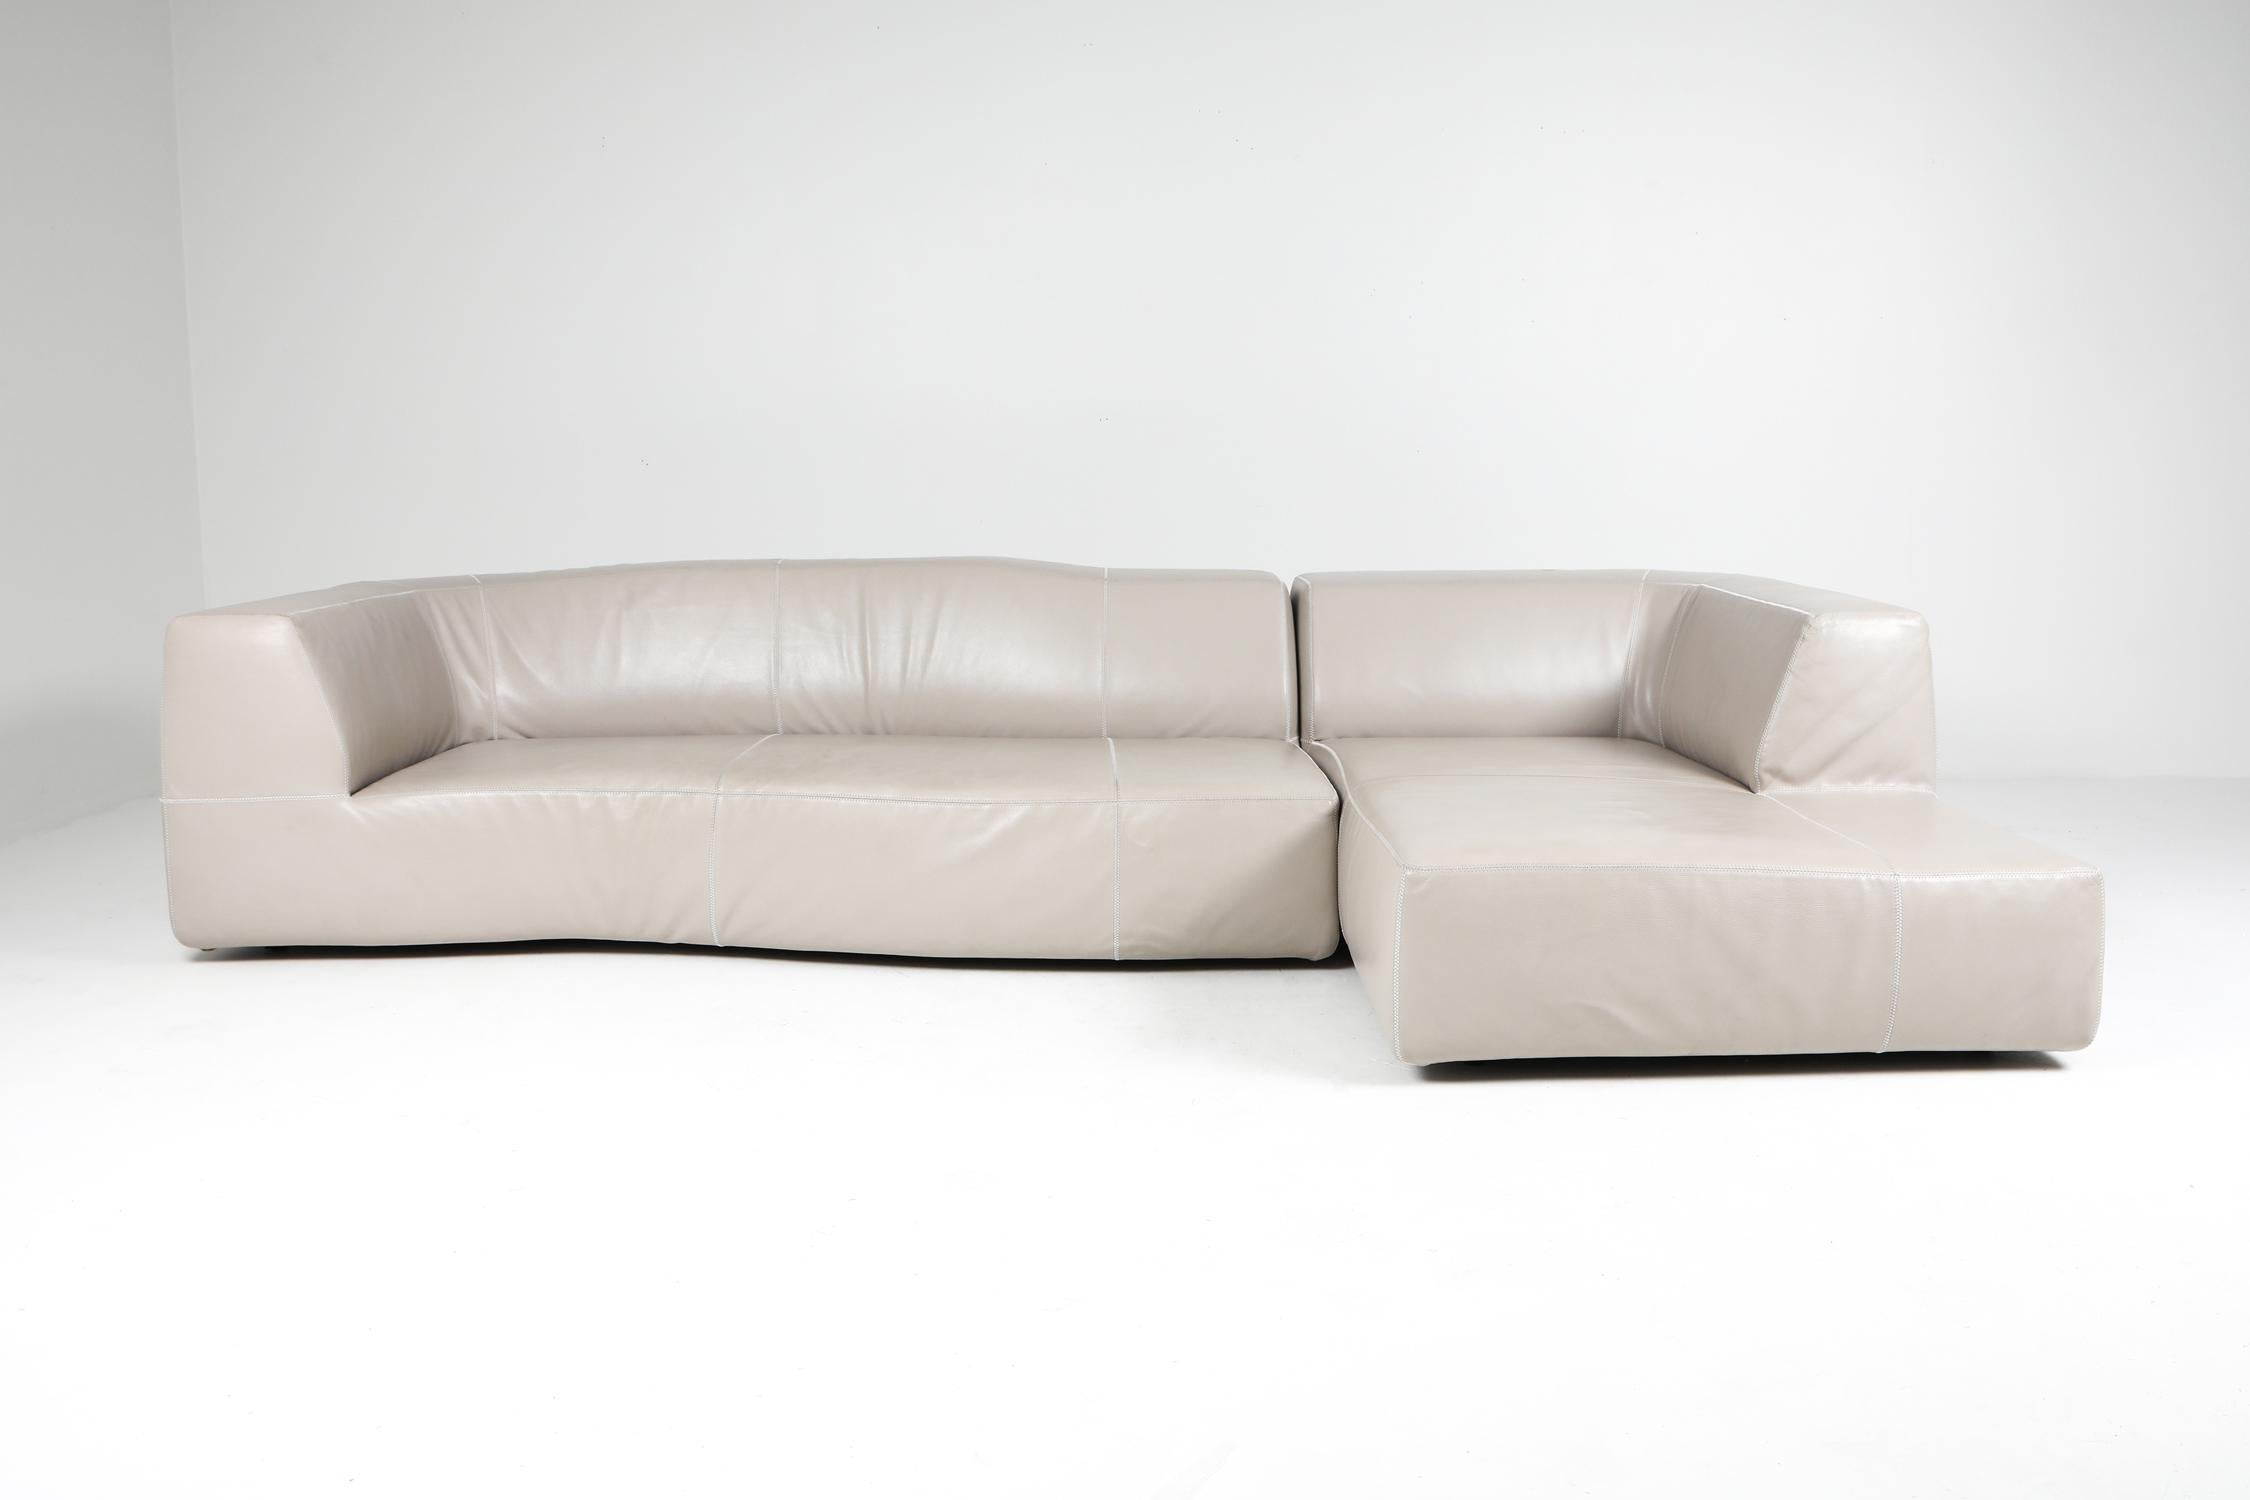 Contemporary leather sofa by Patricia Uquiola for bebitalia, 2010

Patricia Urquiola came up with the name 